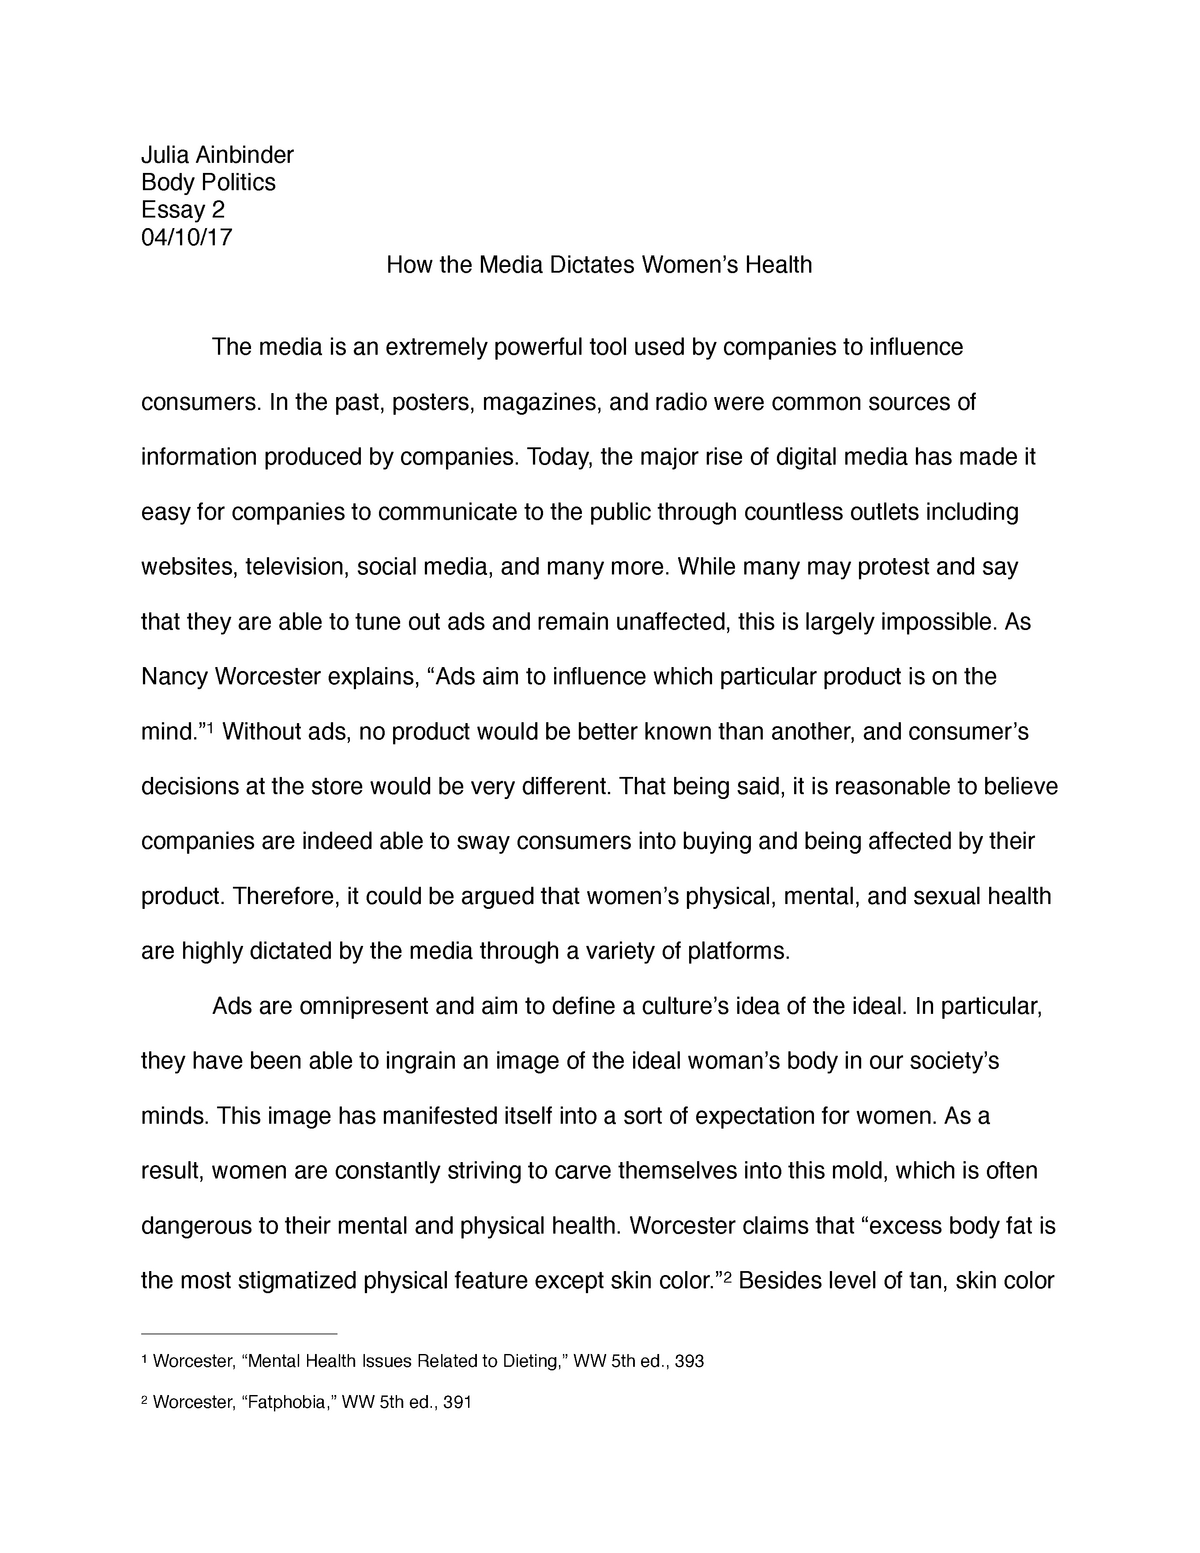 essay about women's health